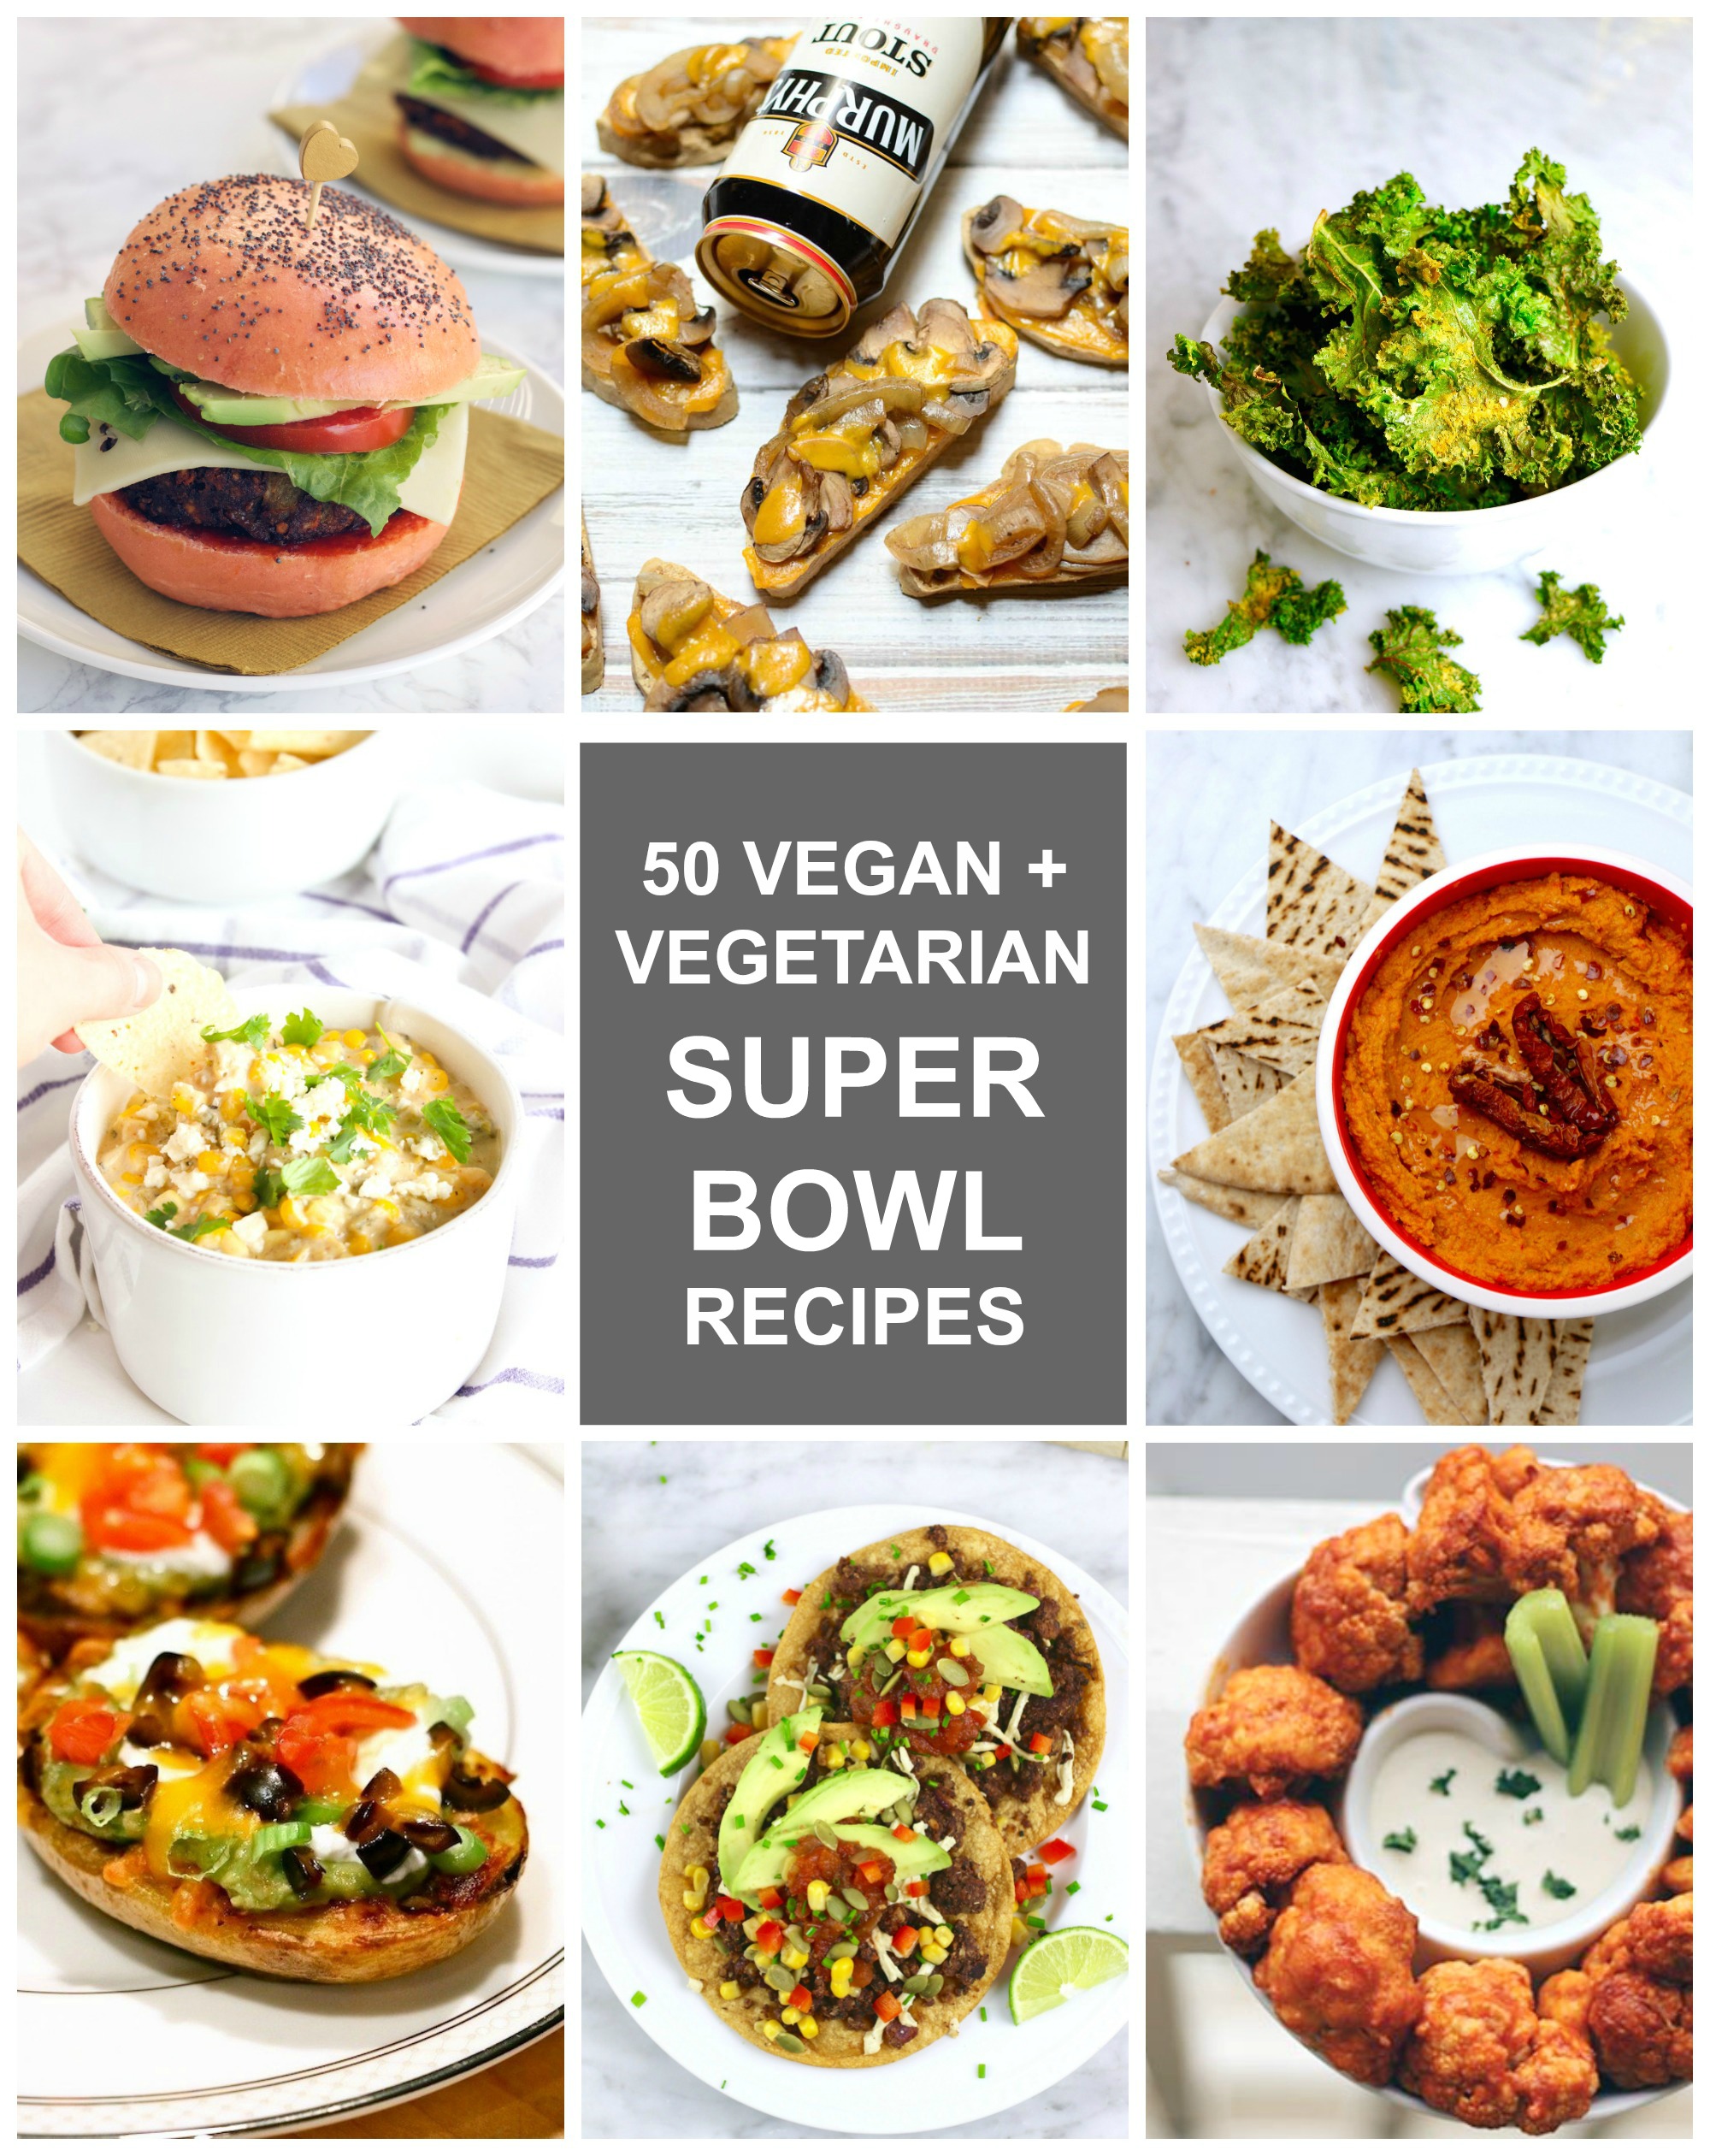 https://www.whitneyerd.com/wp-content/uploads/2017/01/50-Vegan-and-Vegetarian-Super-Bowl-Recipes.jpg